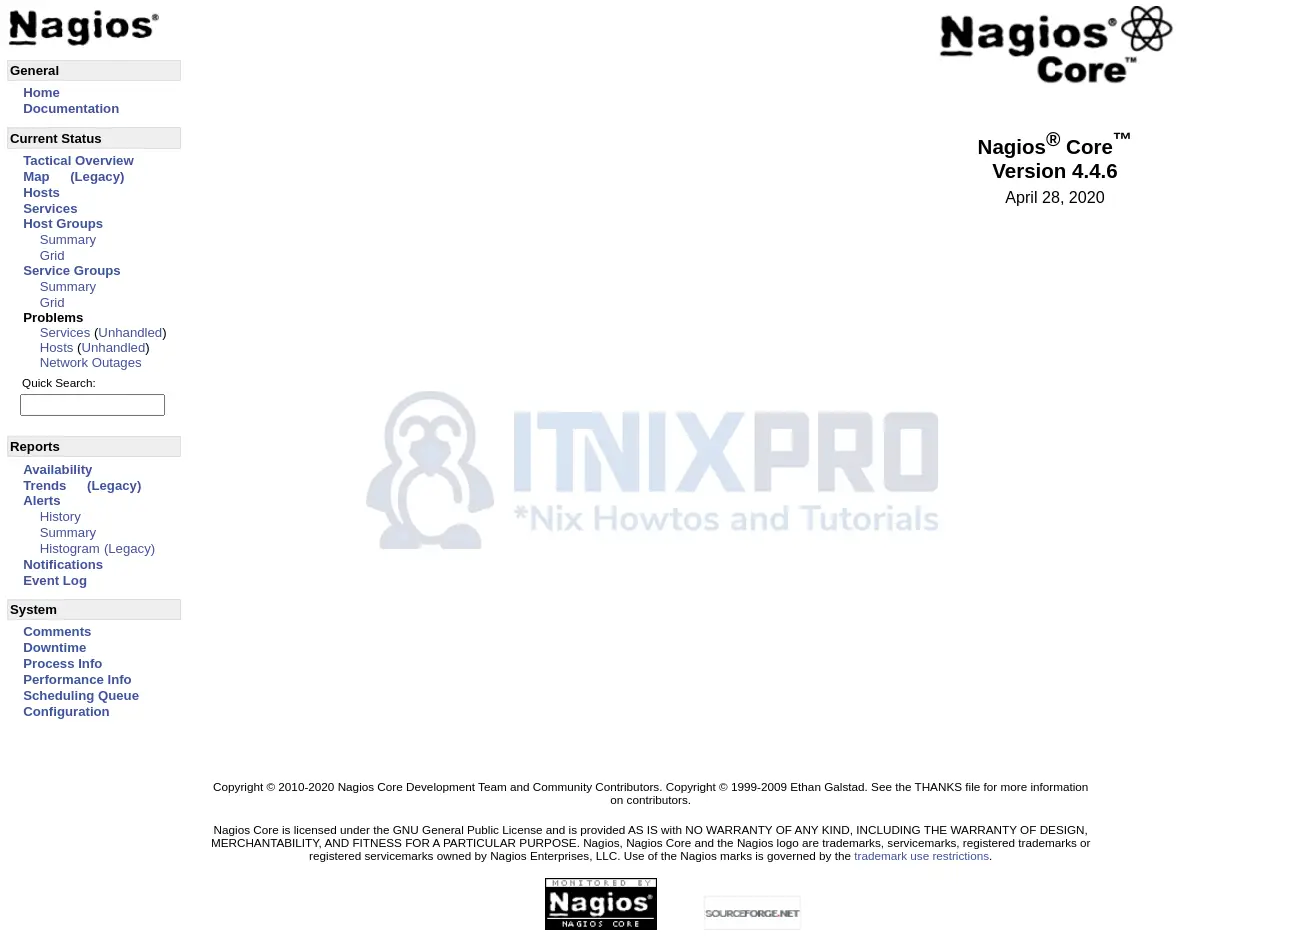 How to Install Nagios Server on Debian 11